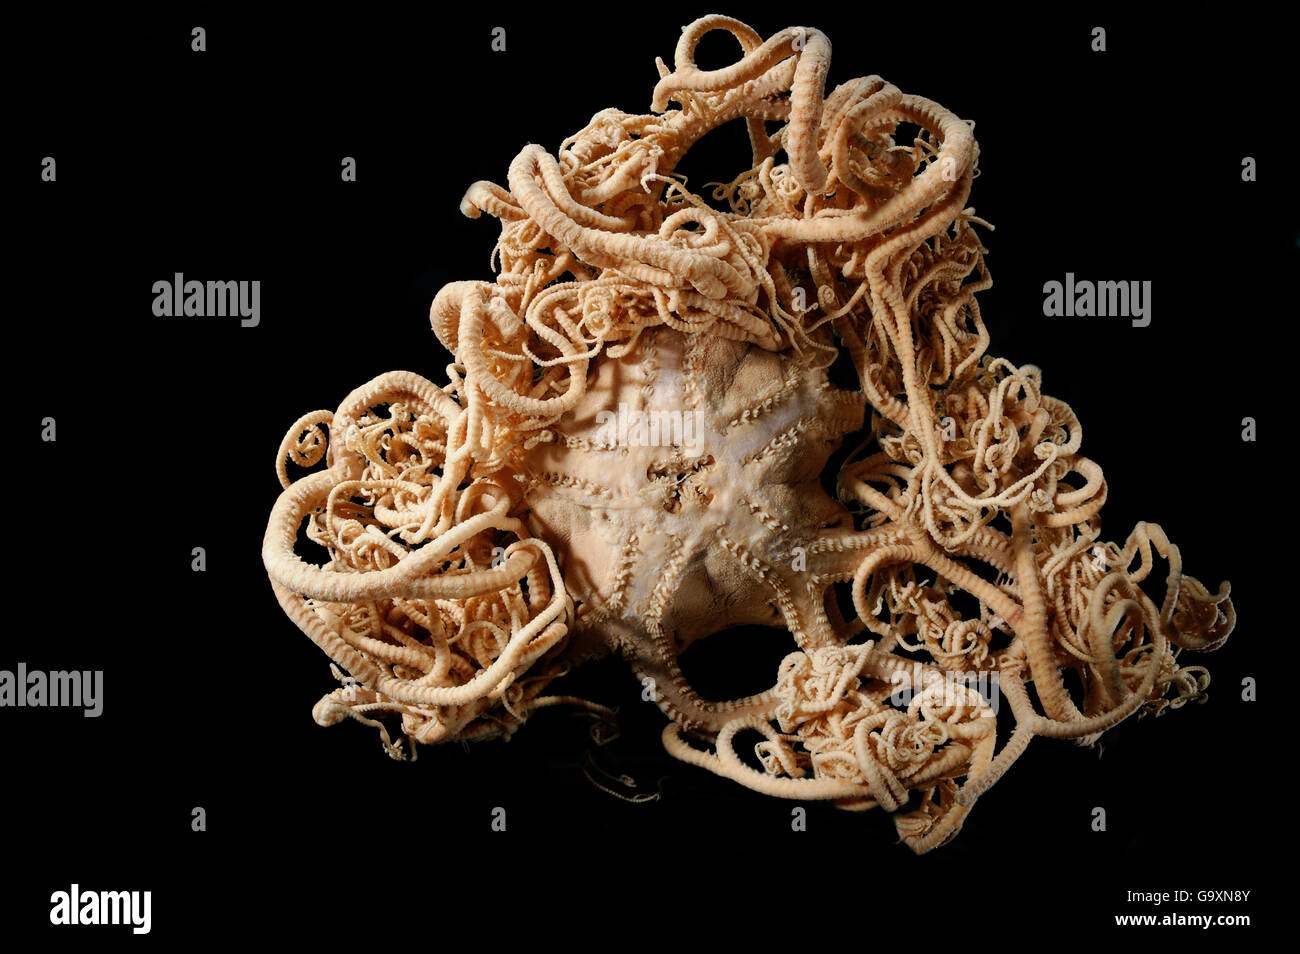 Deepsea Basket star (Gorgonocephalus lamarckii) specimen, from the North Atlantic near Iceland. Stock Photo